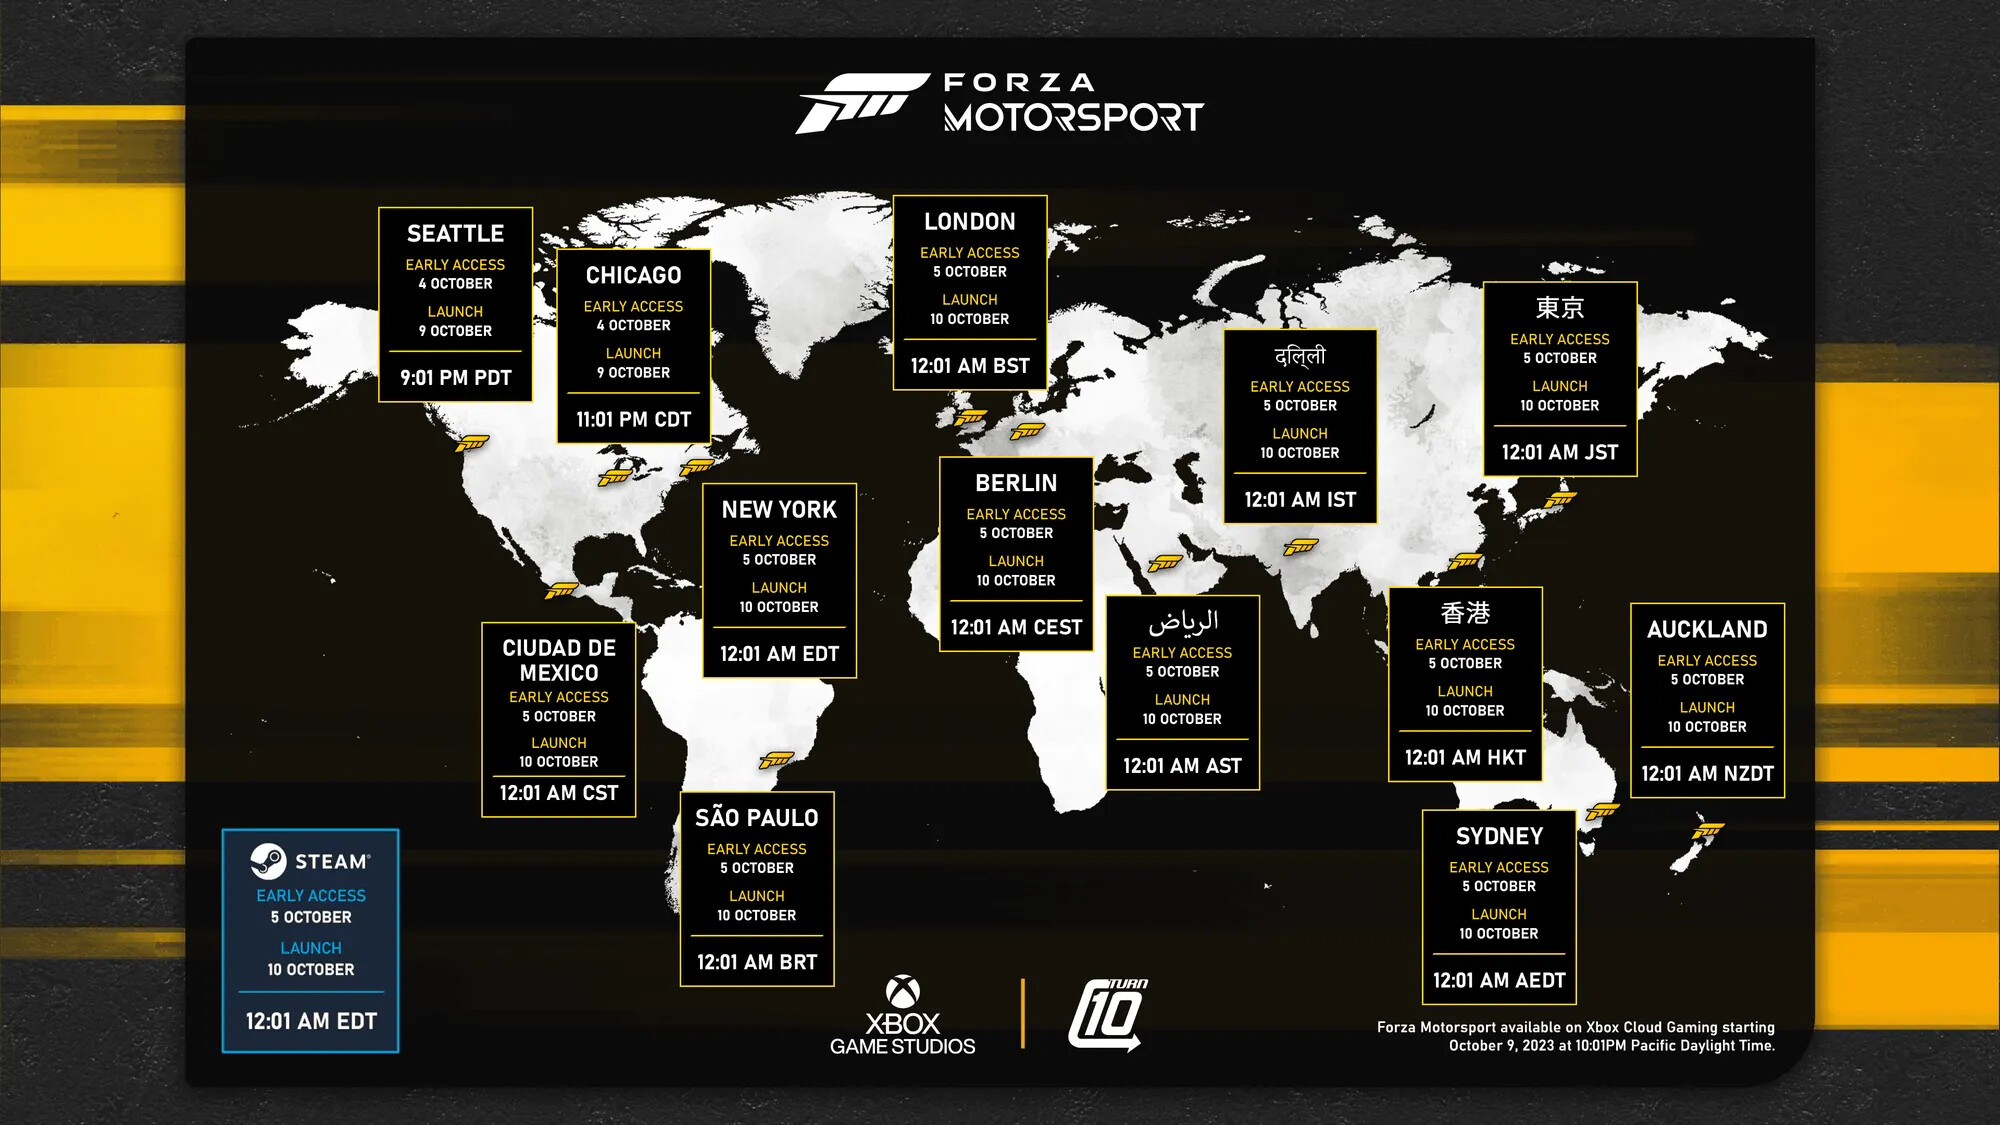 Forza Motorsport Premium Add-Ons Bundle Steam Bundle